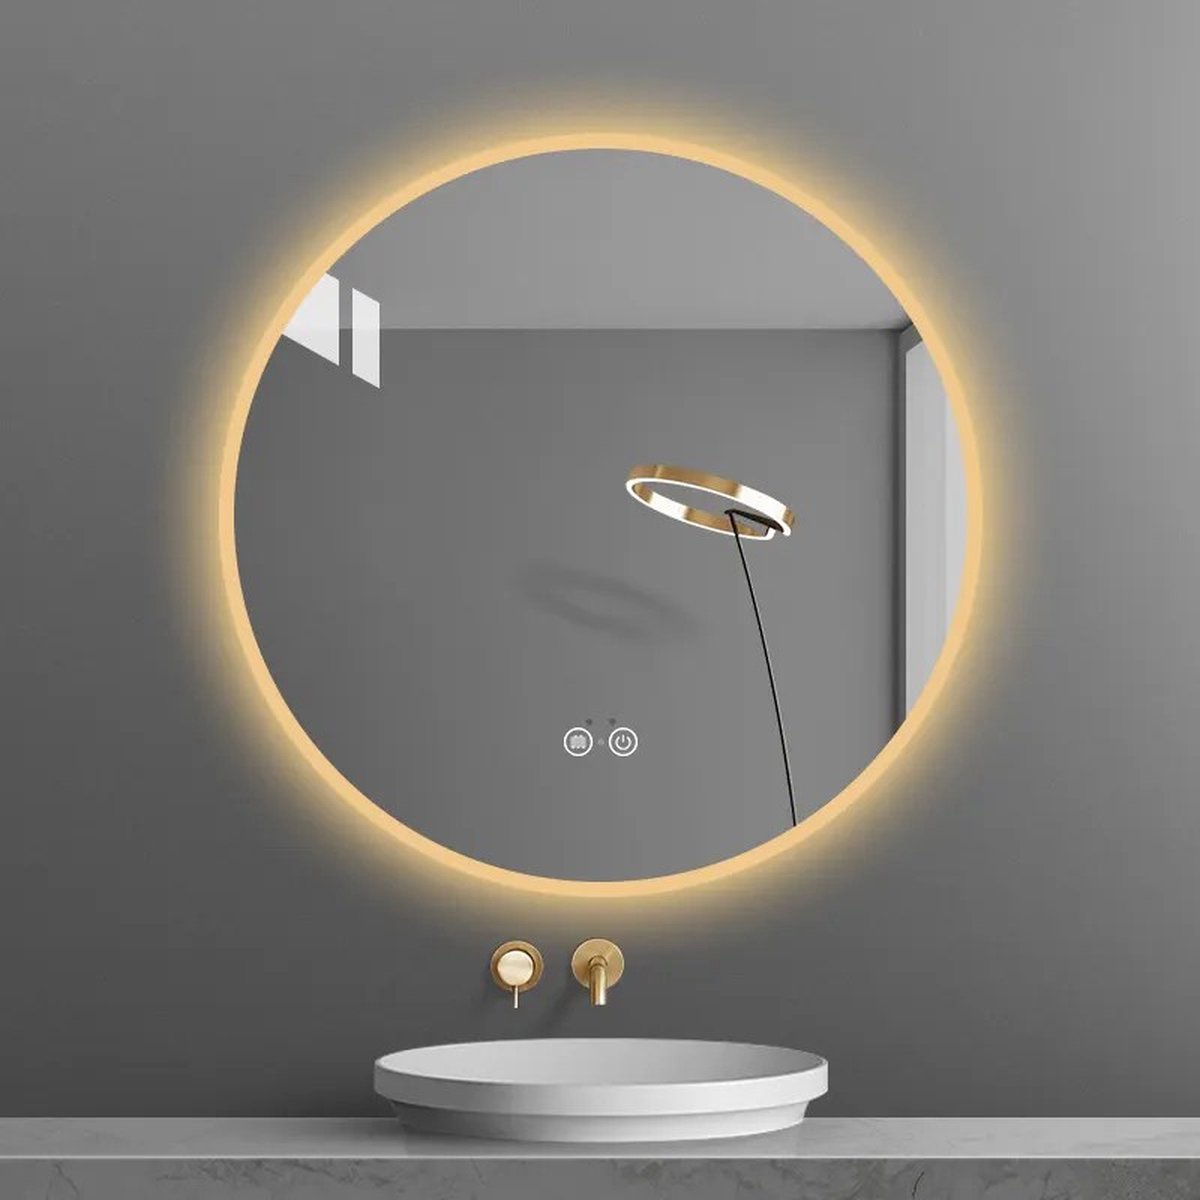 Badkamerspiegel 80cm - 3 tinten Led - Anti condens - LED spiegel - Wandspiegel badkamer